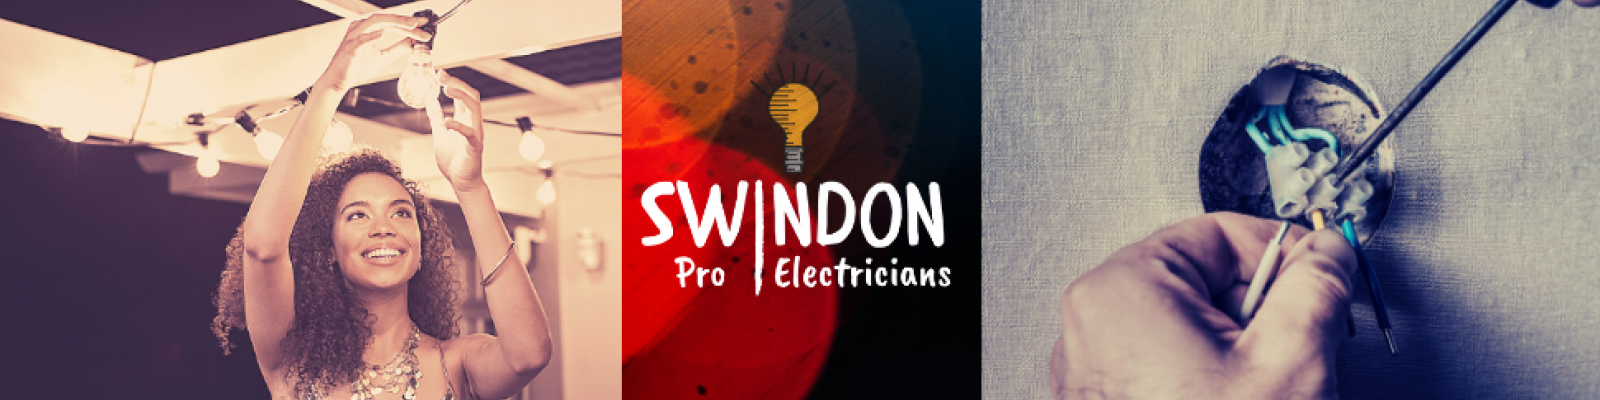 Swindon Pro Electricians banner